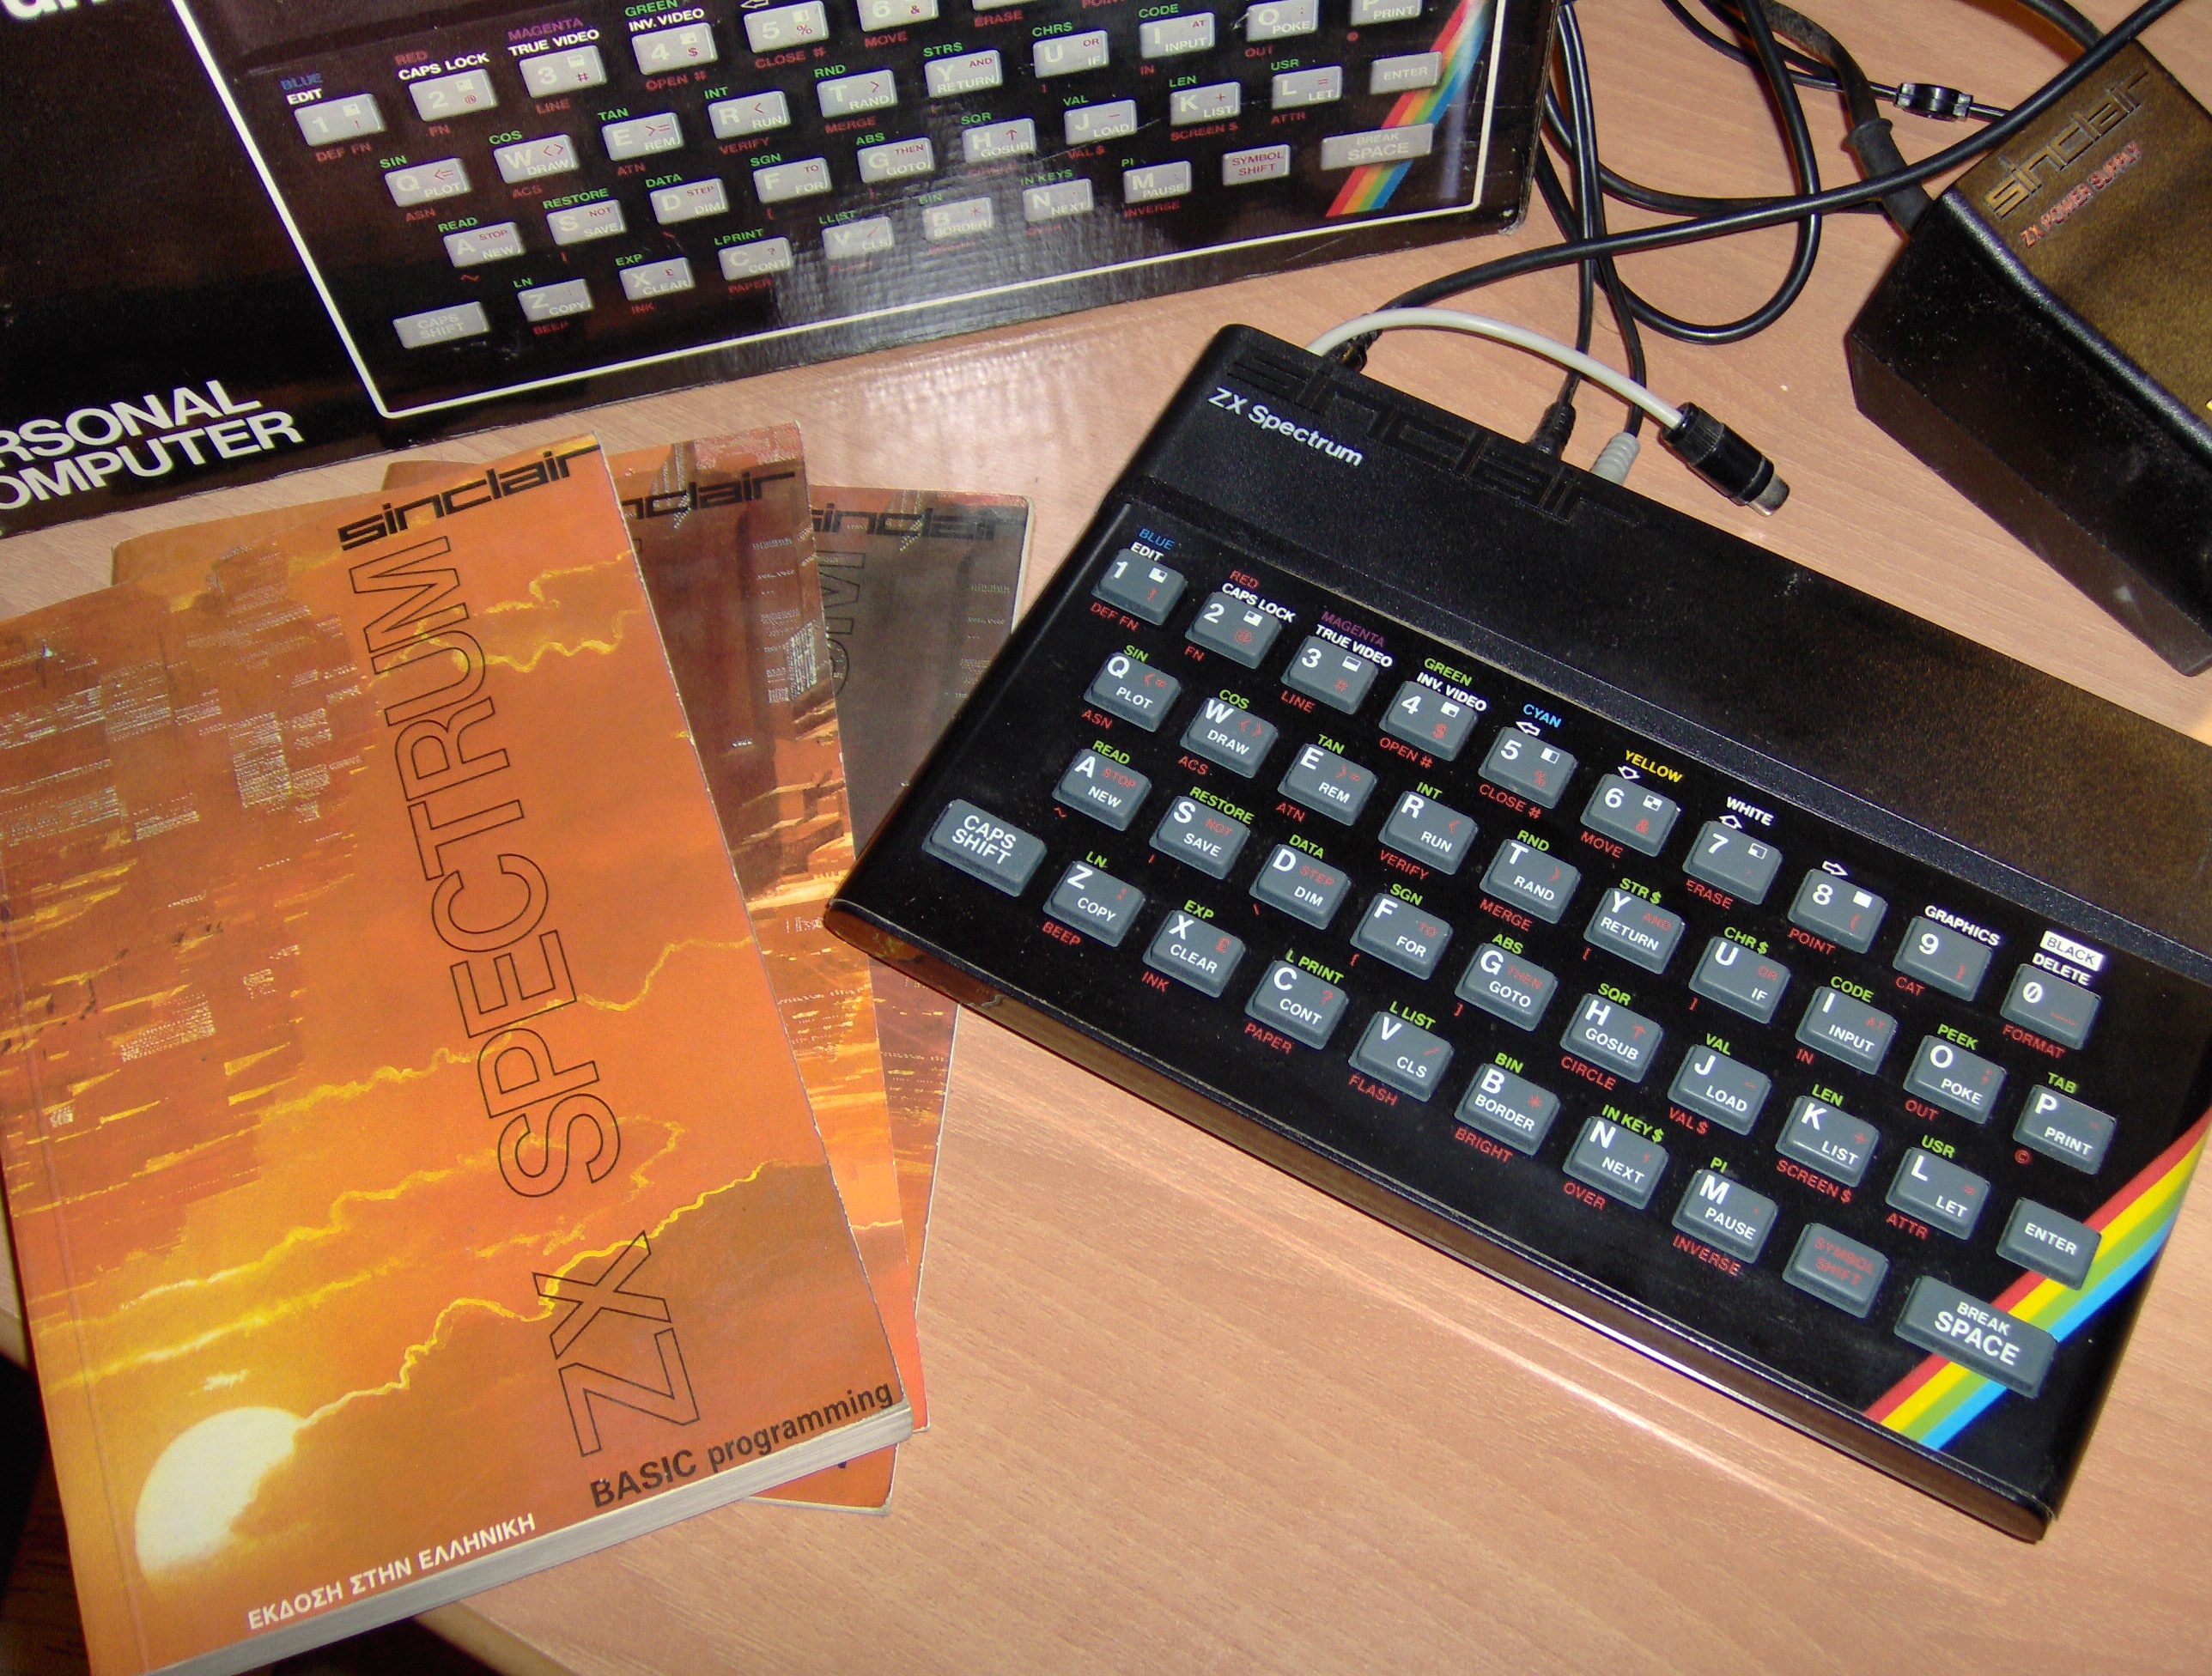 ZX Spectrum 2